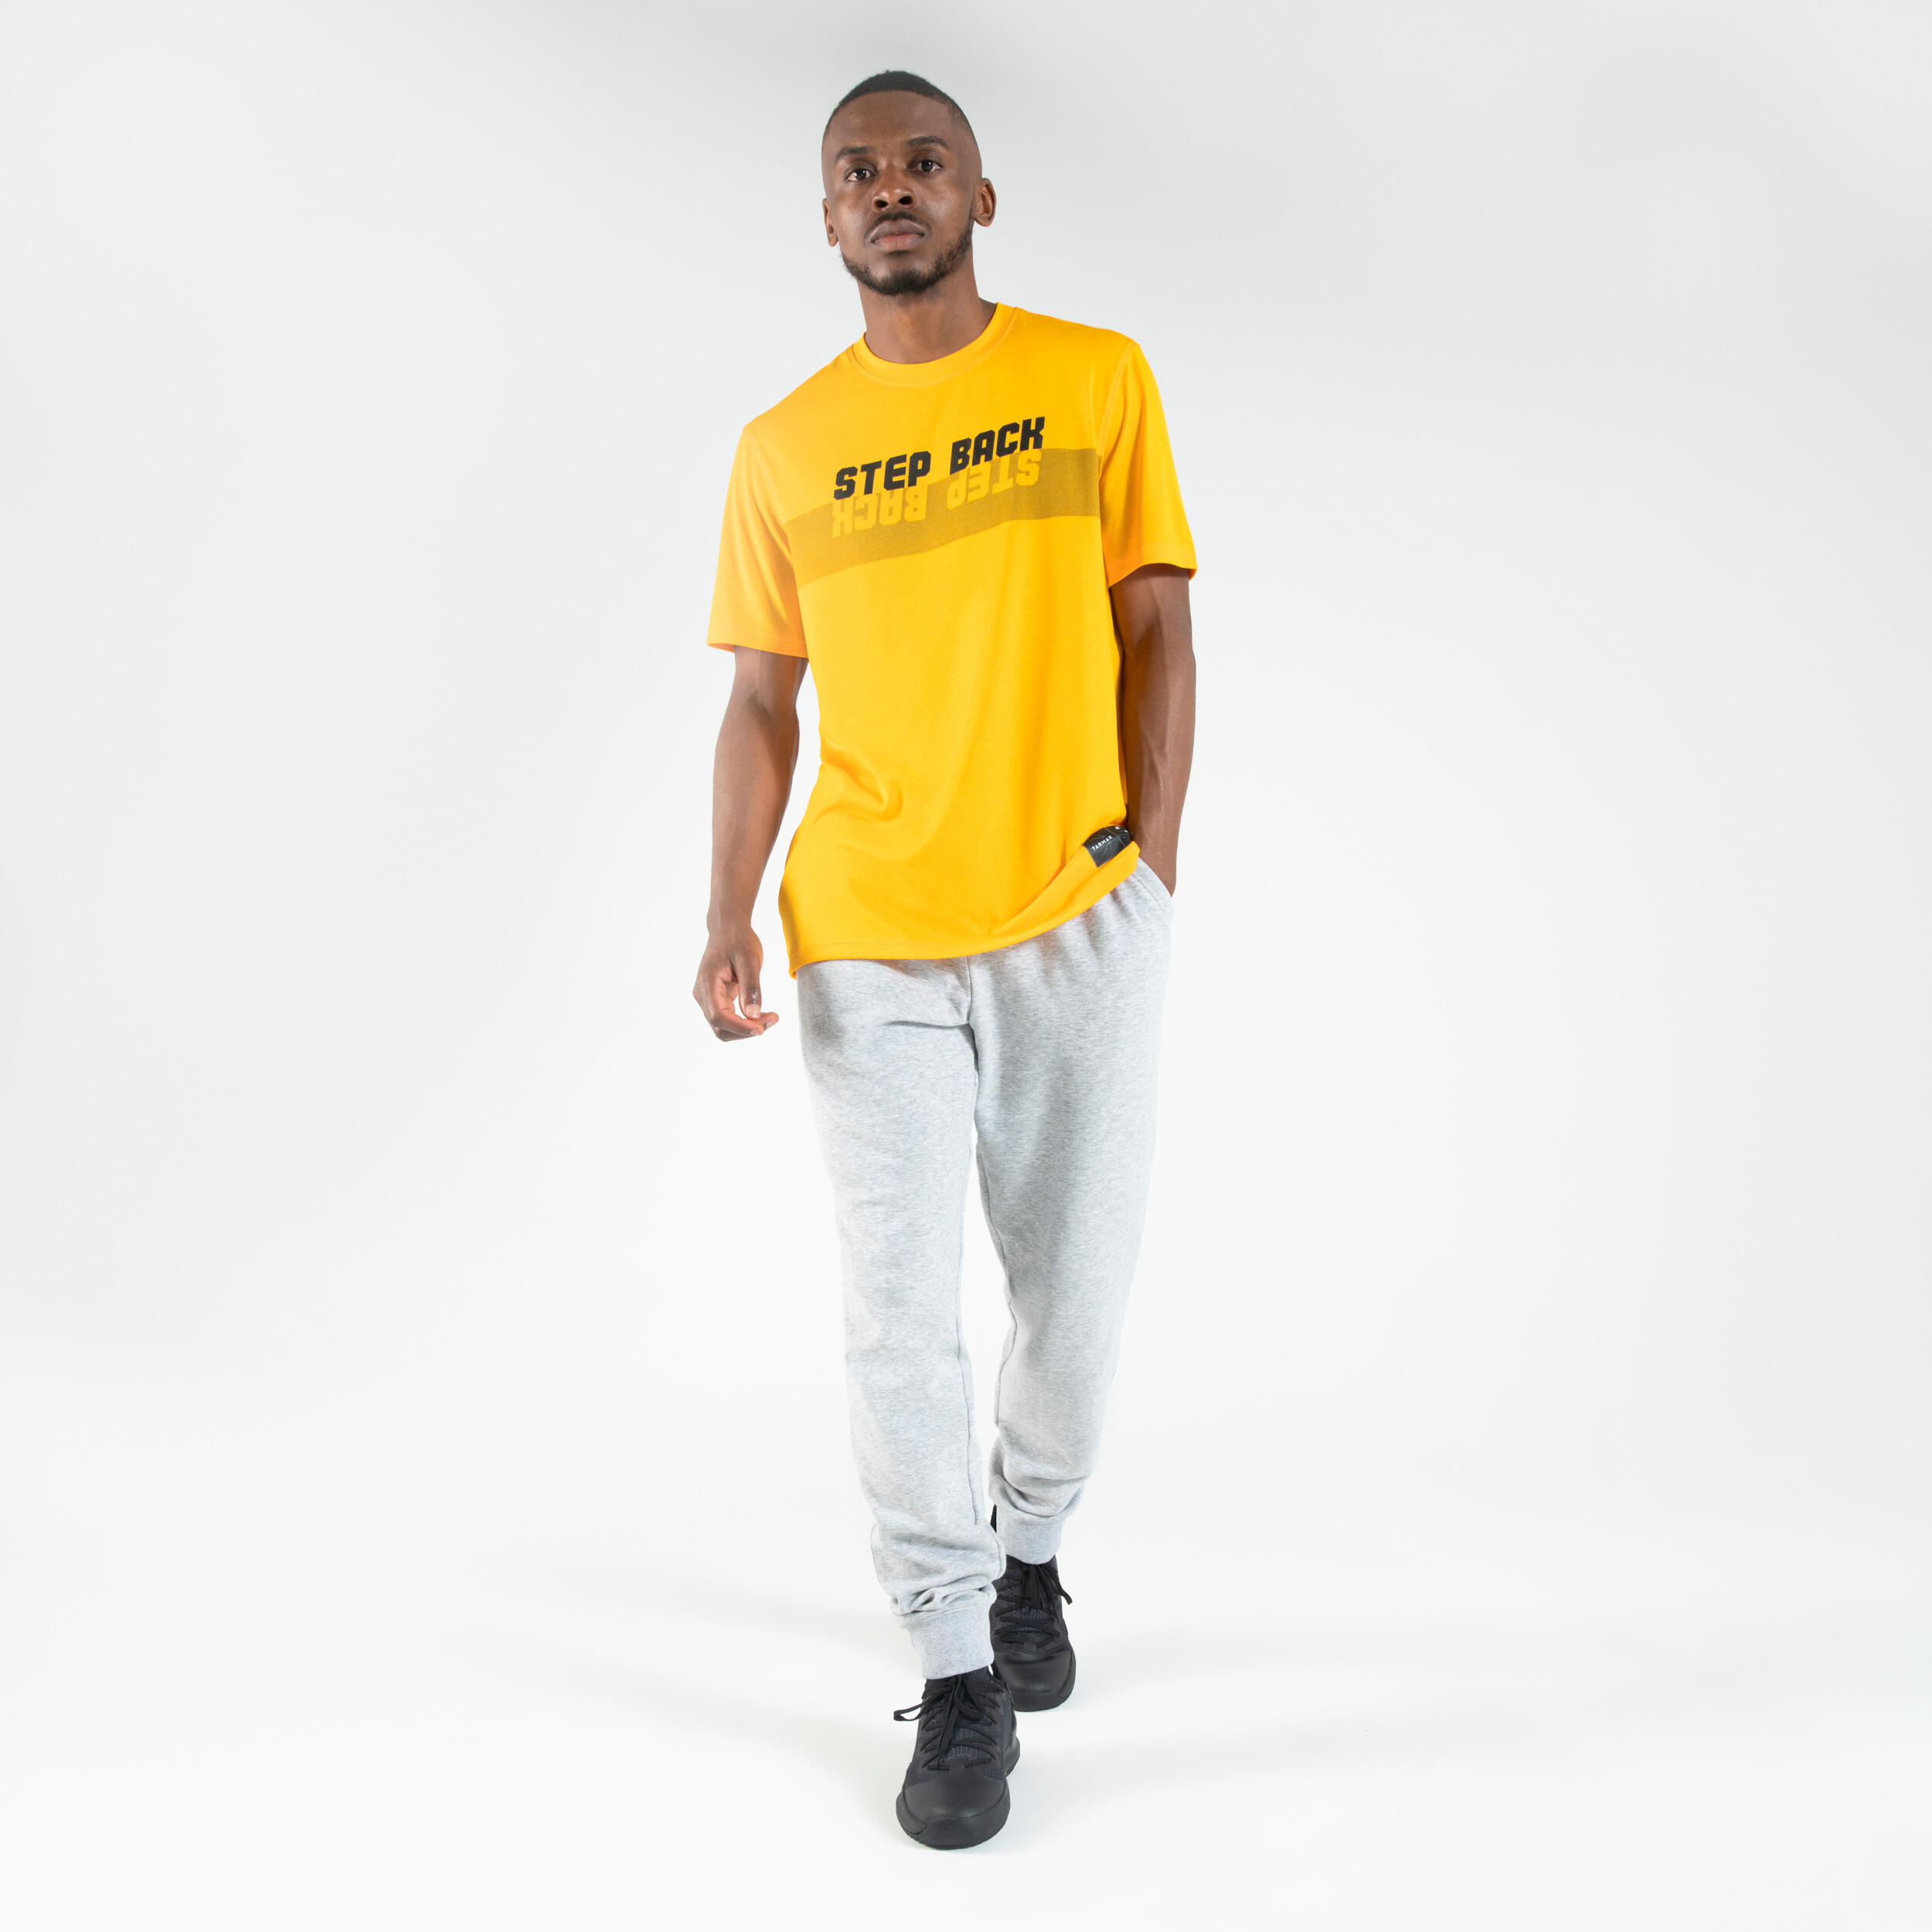 Men's/Women's Basketball T-Shirt/Jersey TS500 Fast - Yellow 6/7